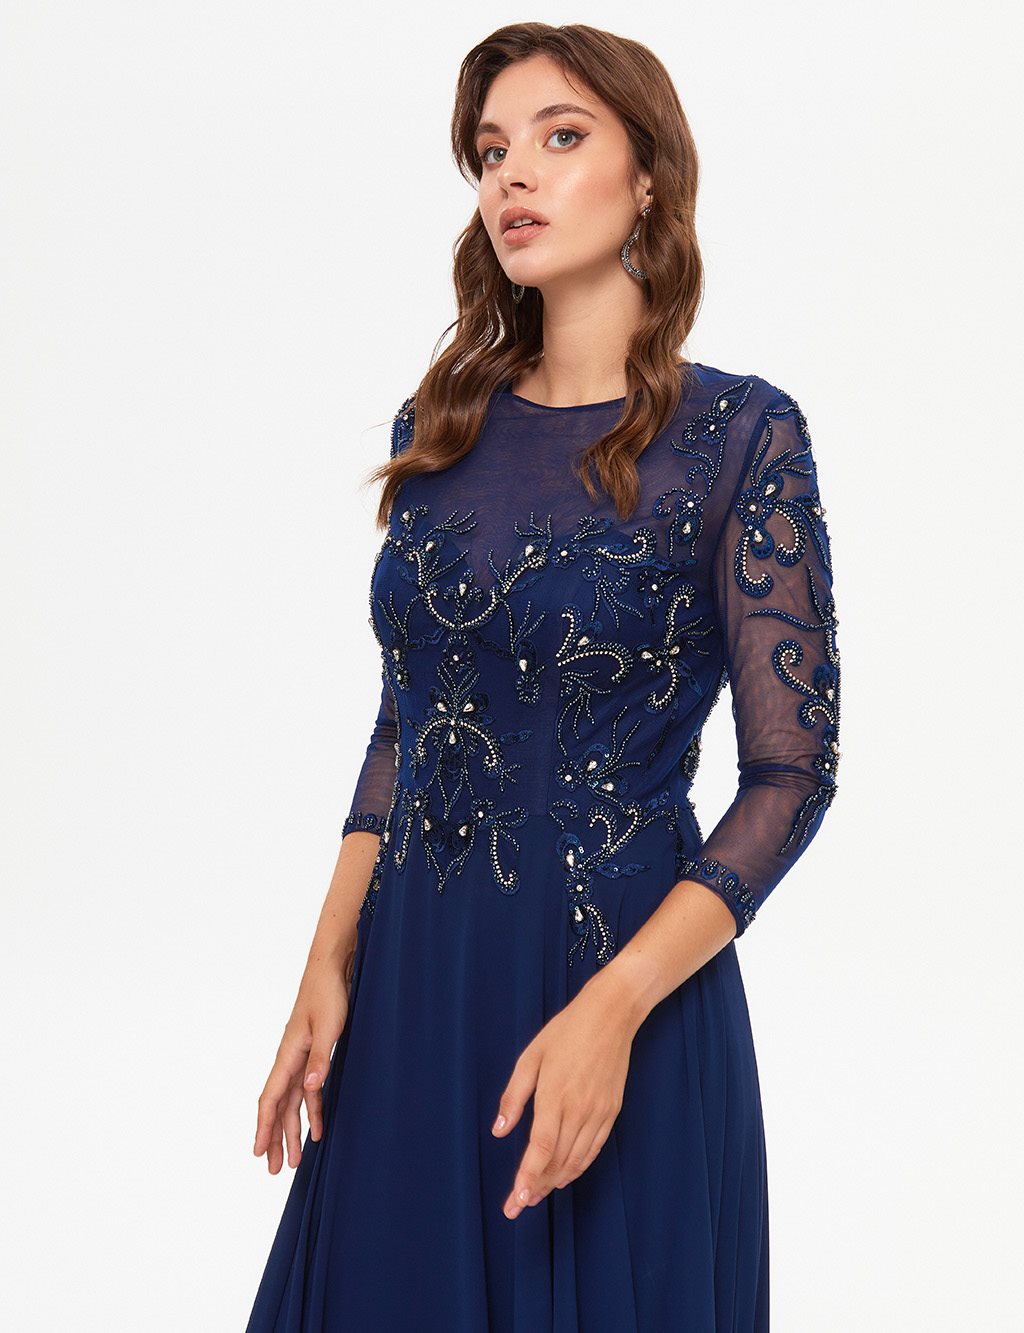 TIARA Embroidered Illusion Collar Evening Dress Navy